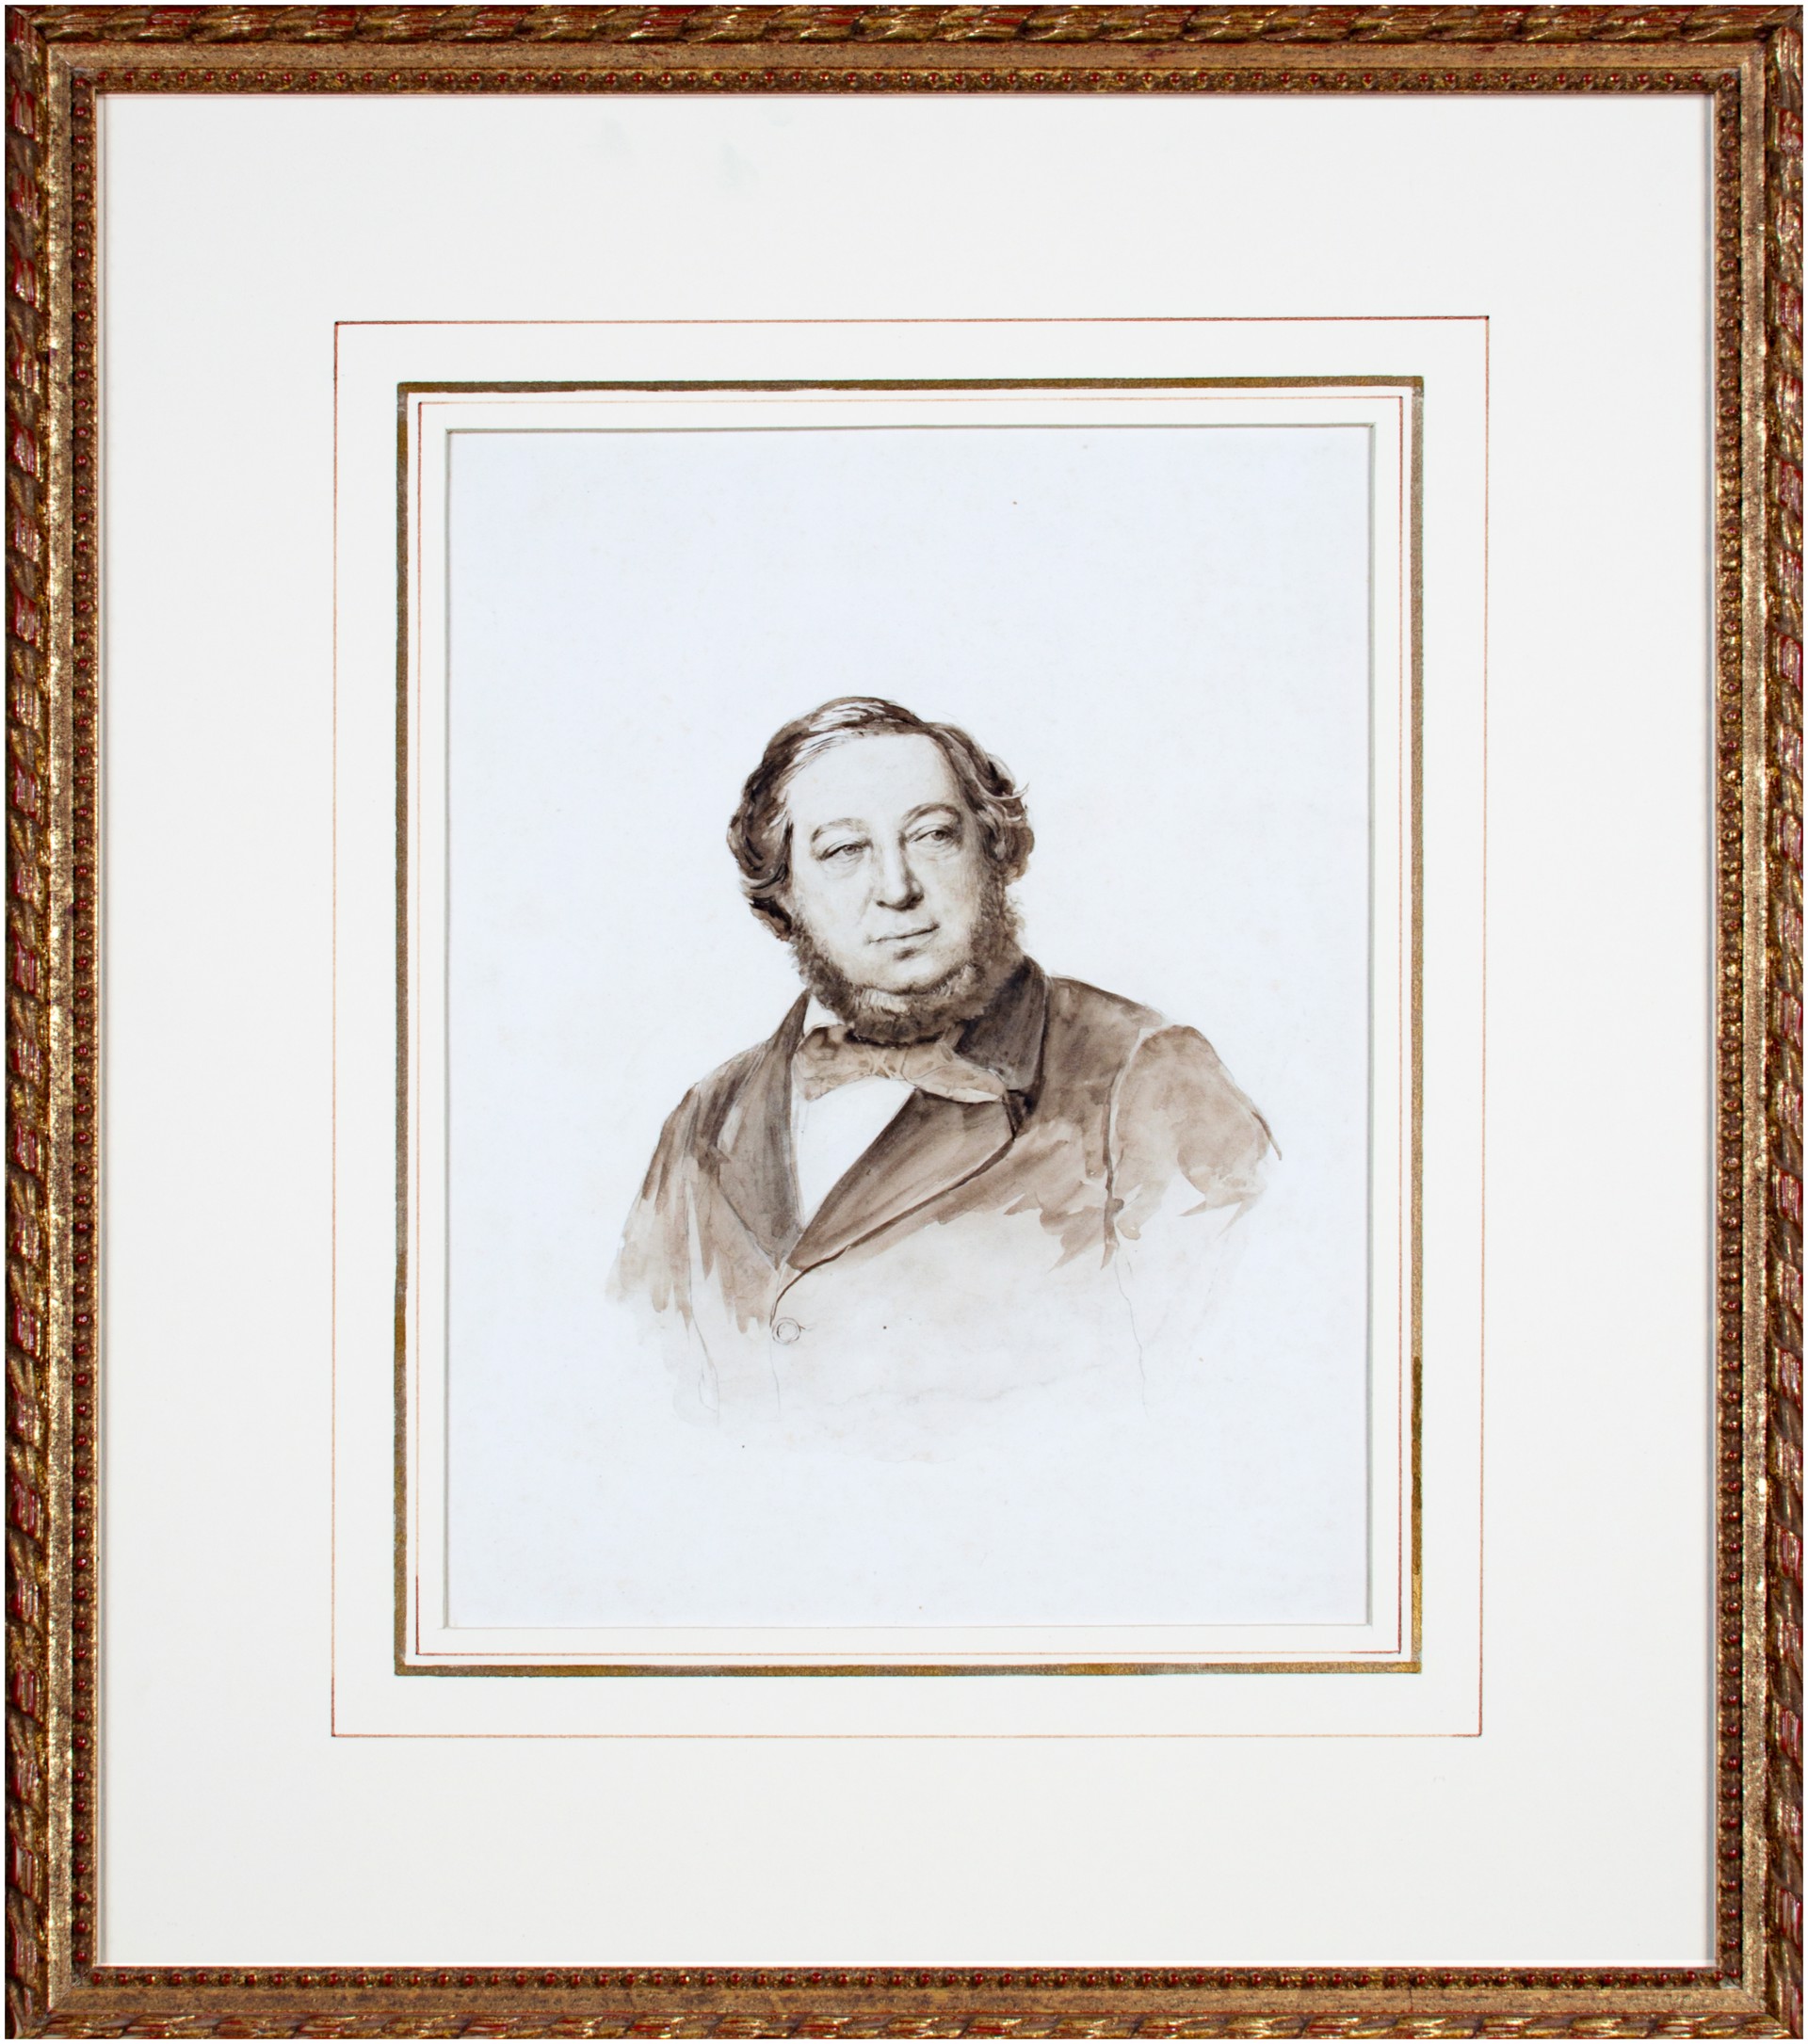 Portrait of Baron Mayer de Rothschild, Rothschild Collection by Oscar Gustave Rejlander